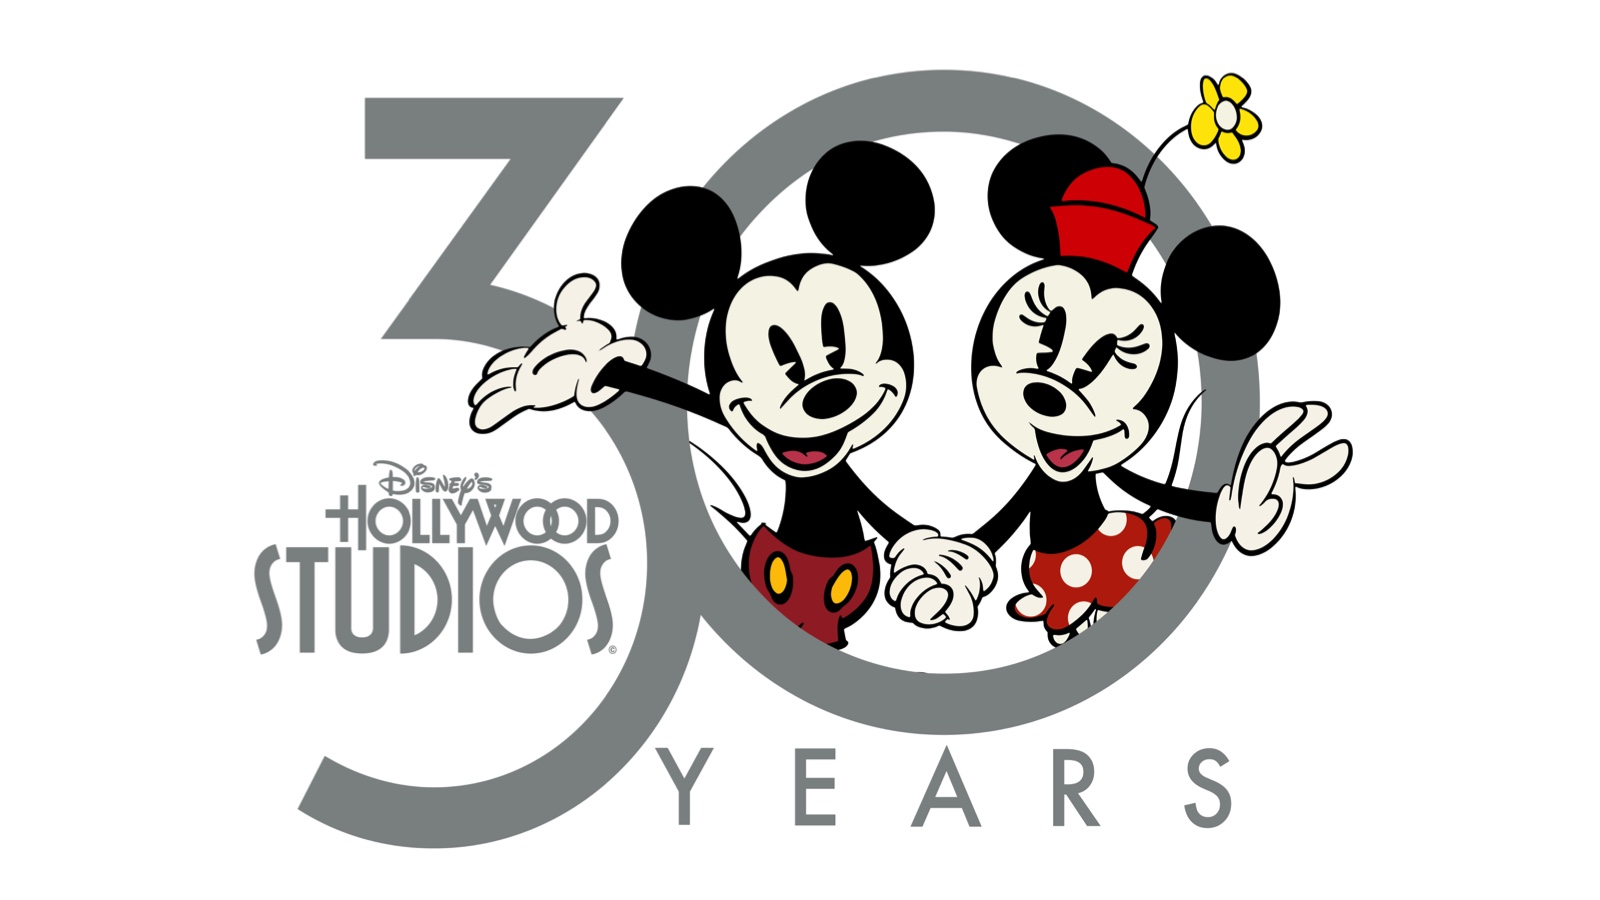 Disney's Hollywood Studios Debuts 30th Anniversary Logo - LaughingPlace.com